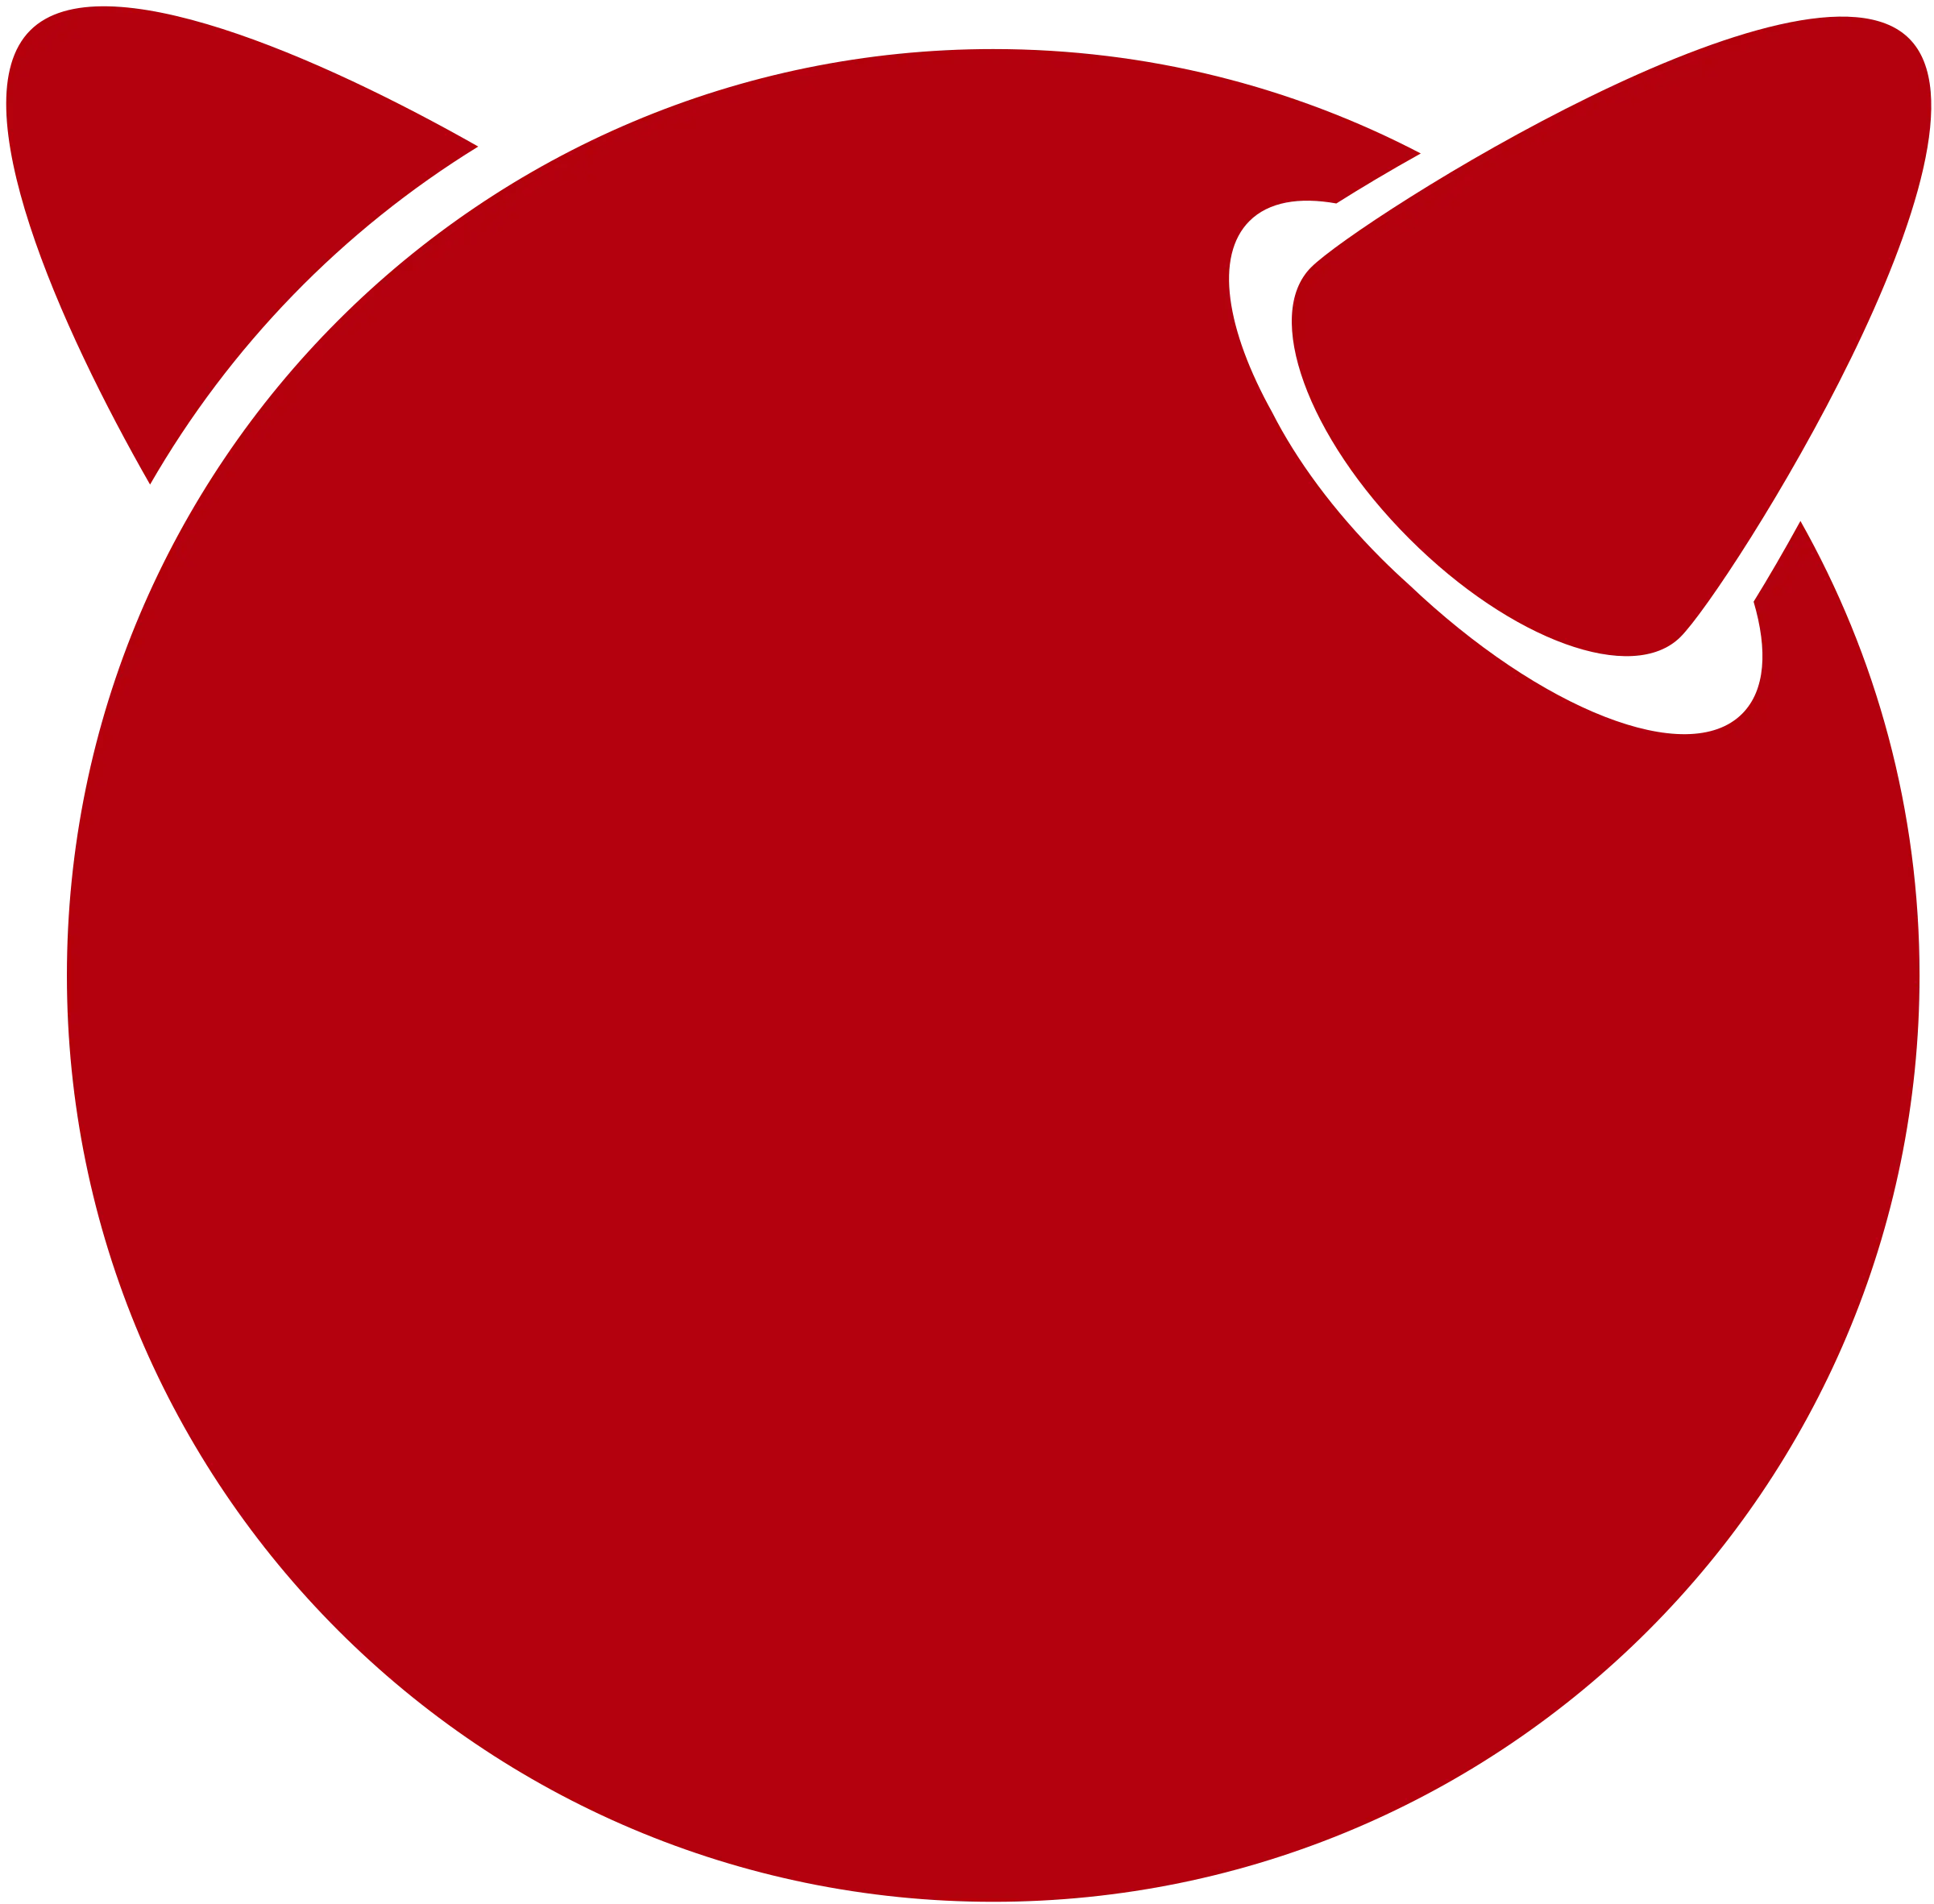 FreeBSD logo advantage img